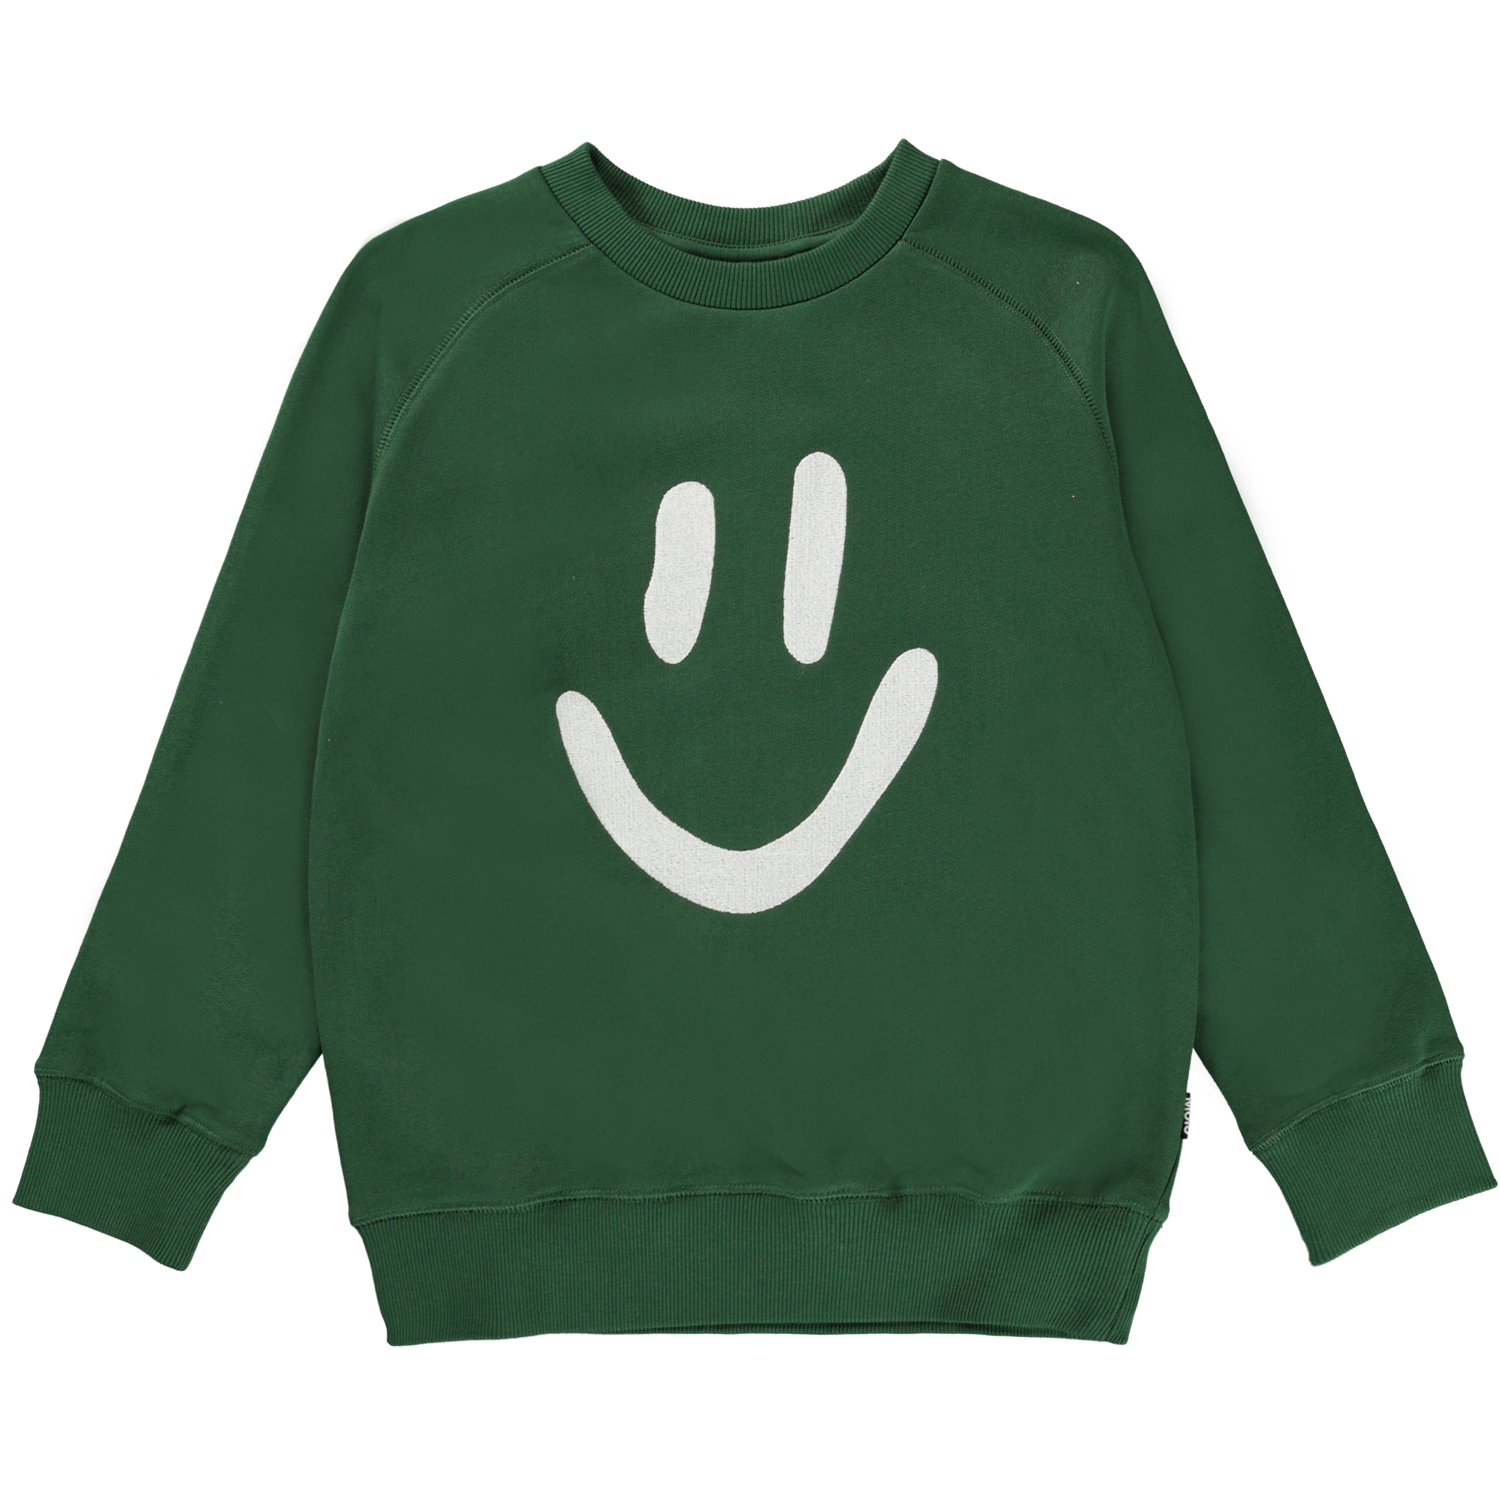 Mike - Eden - Green organic sweatshirt with smiley face print - Molo